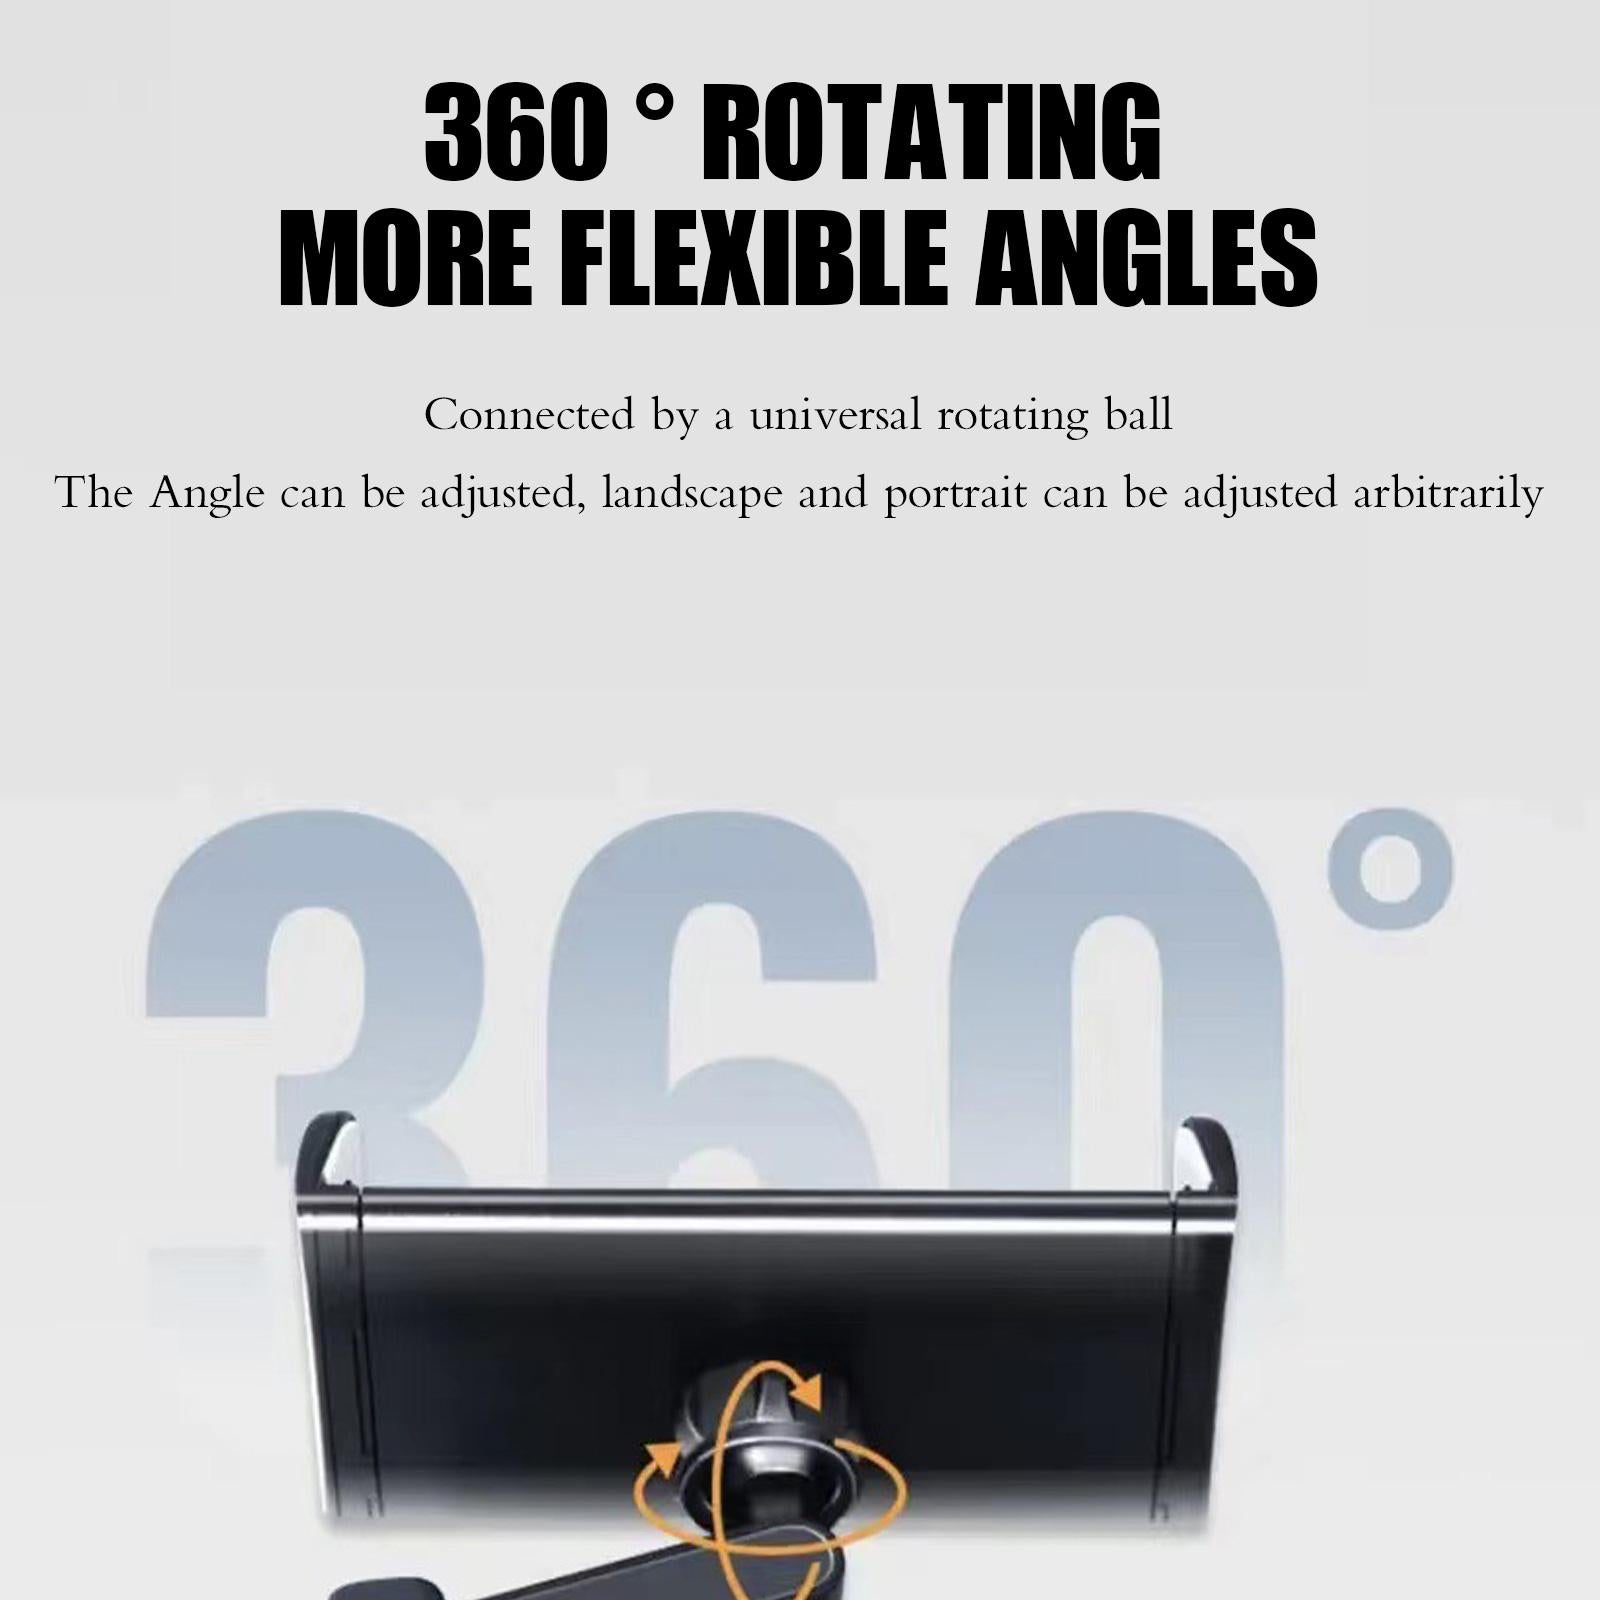 360-degree angle adjustment